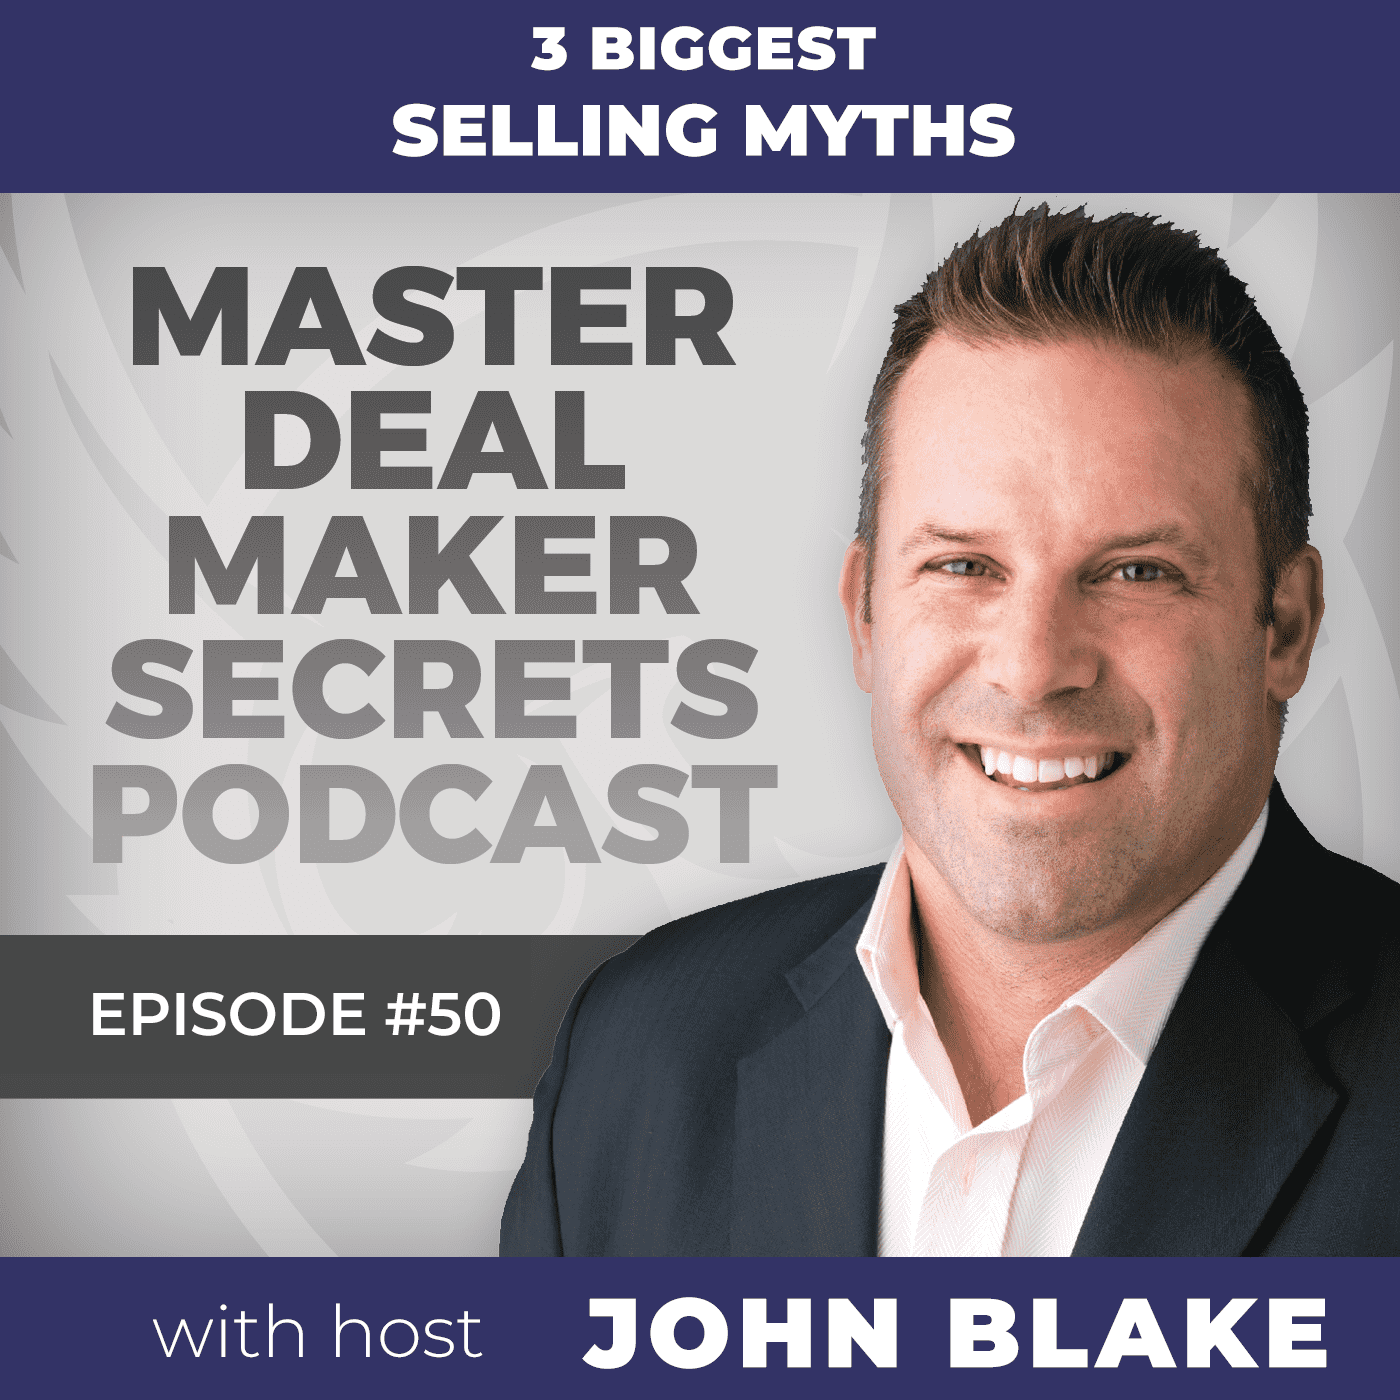 John Blake 3 Biggest Selling Myths